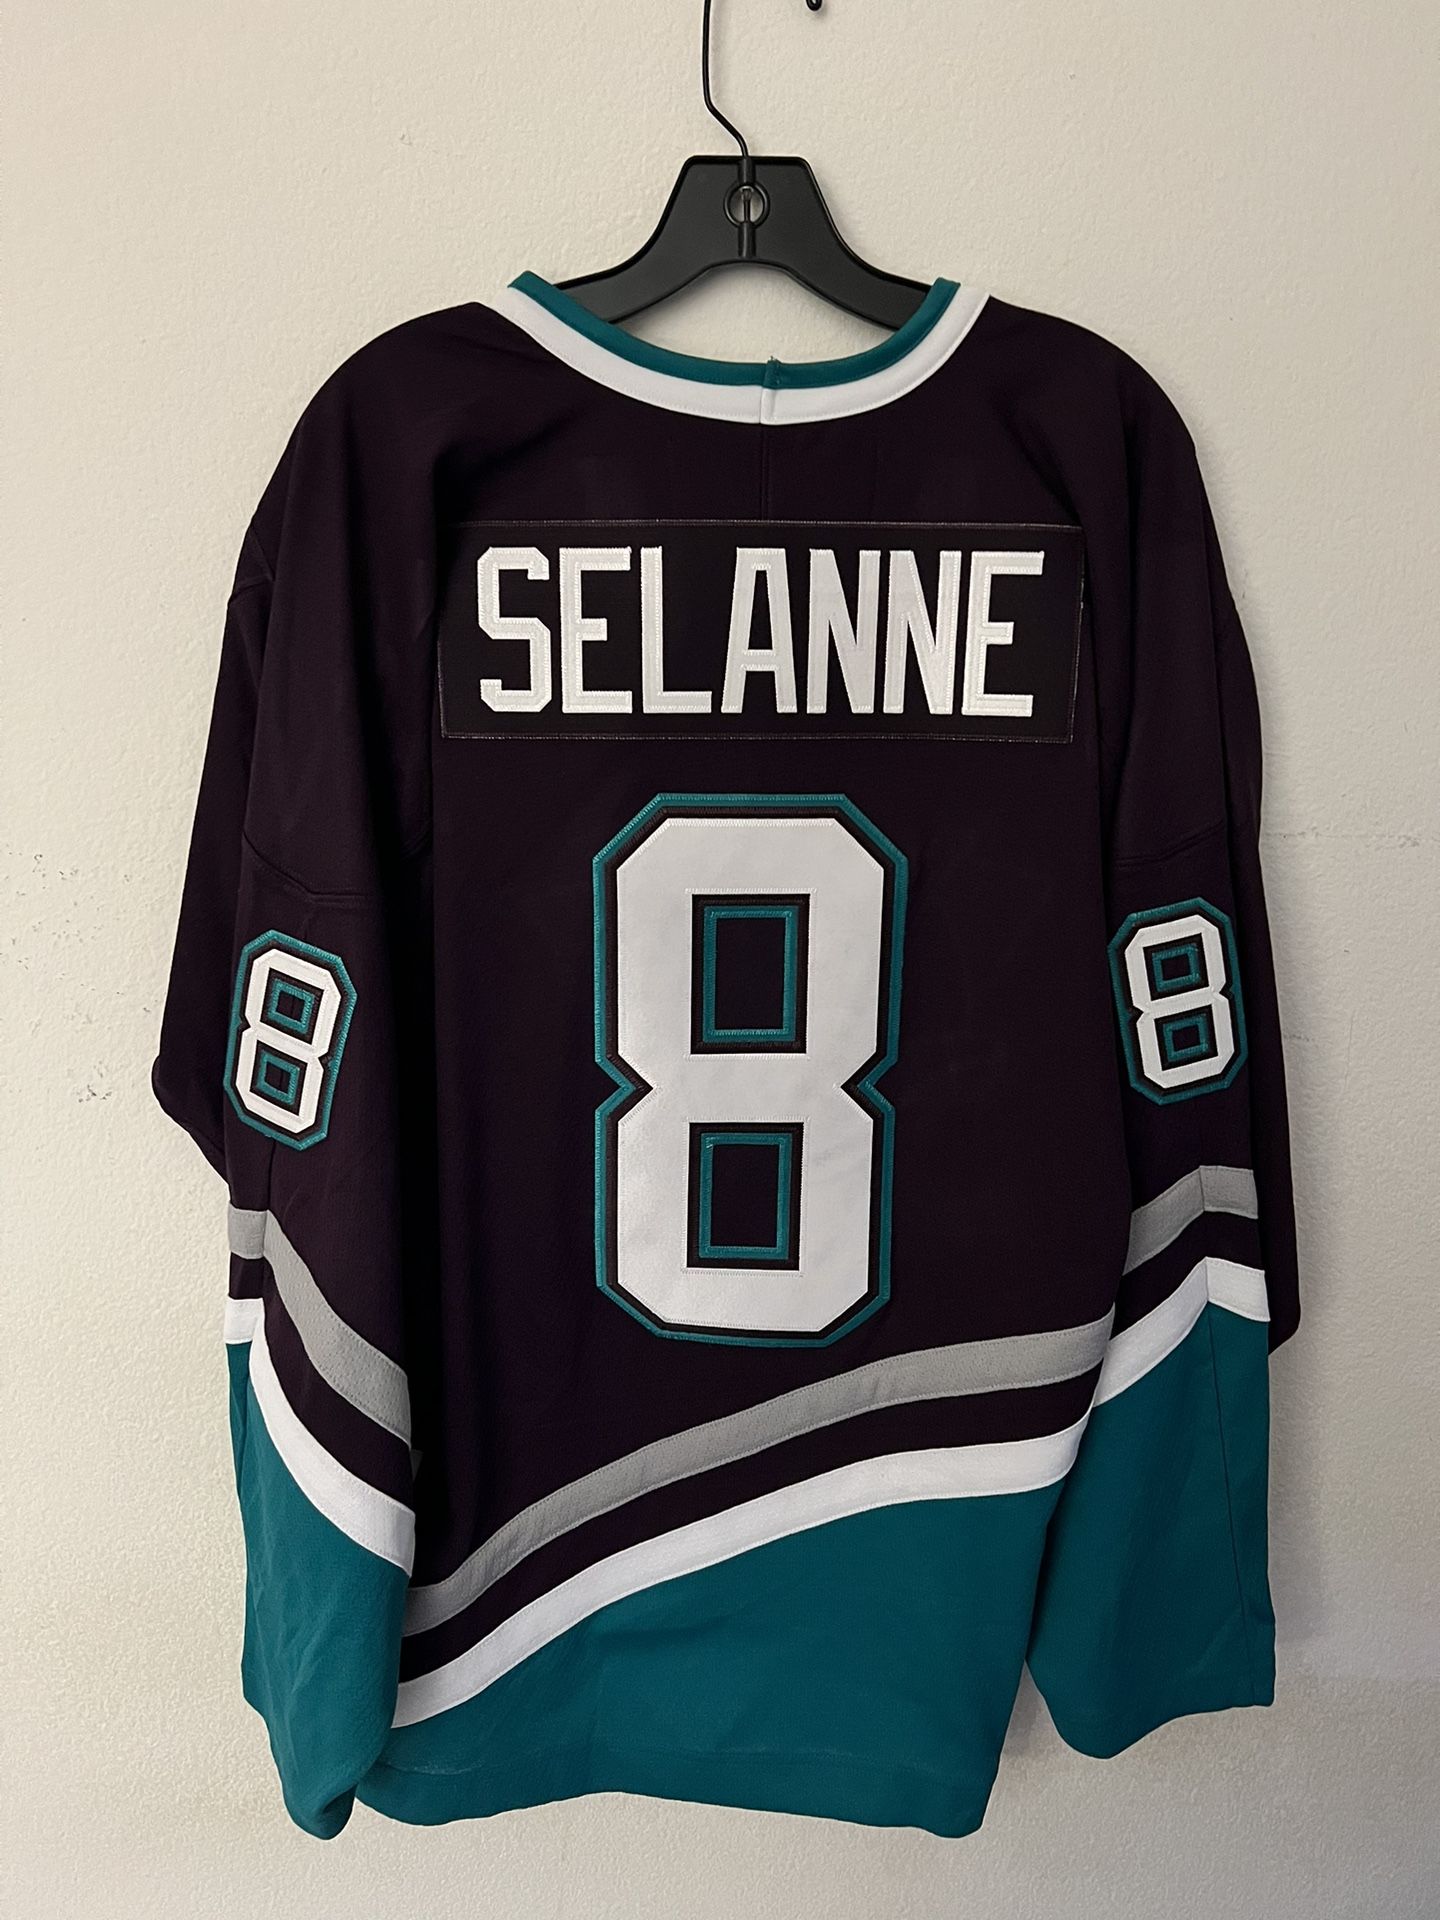 Teemu Selanne Tribute Night Jersey for Sale in Anaheim, CA